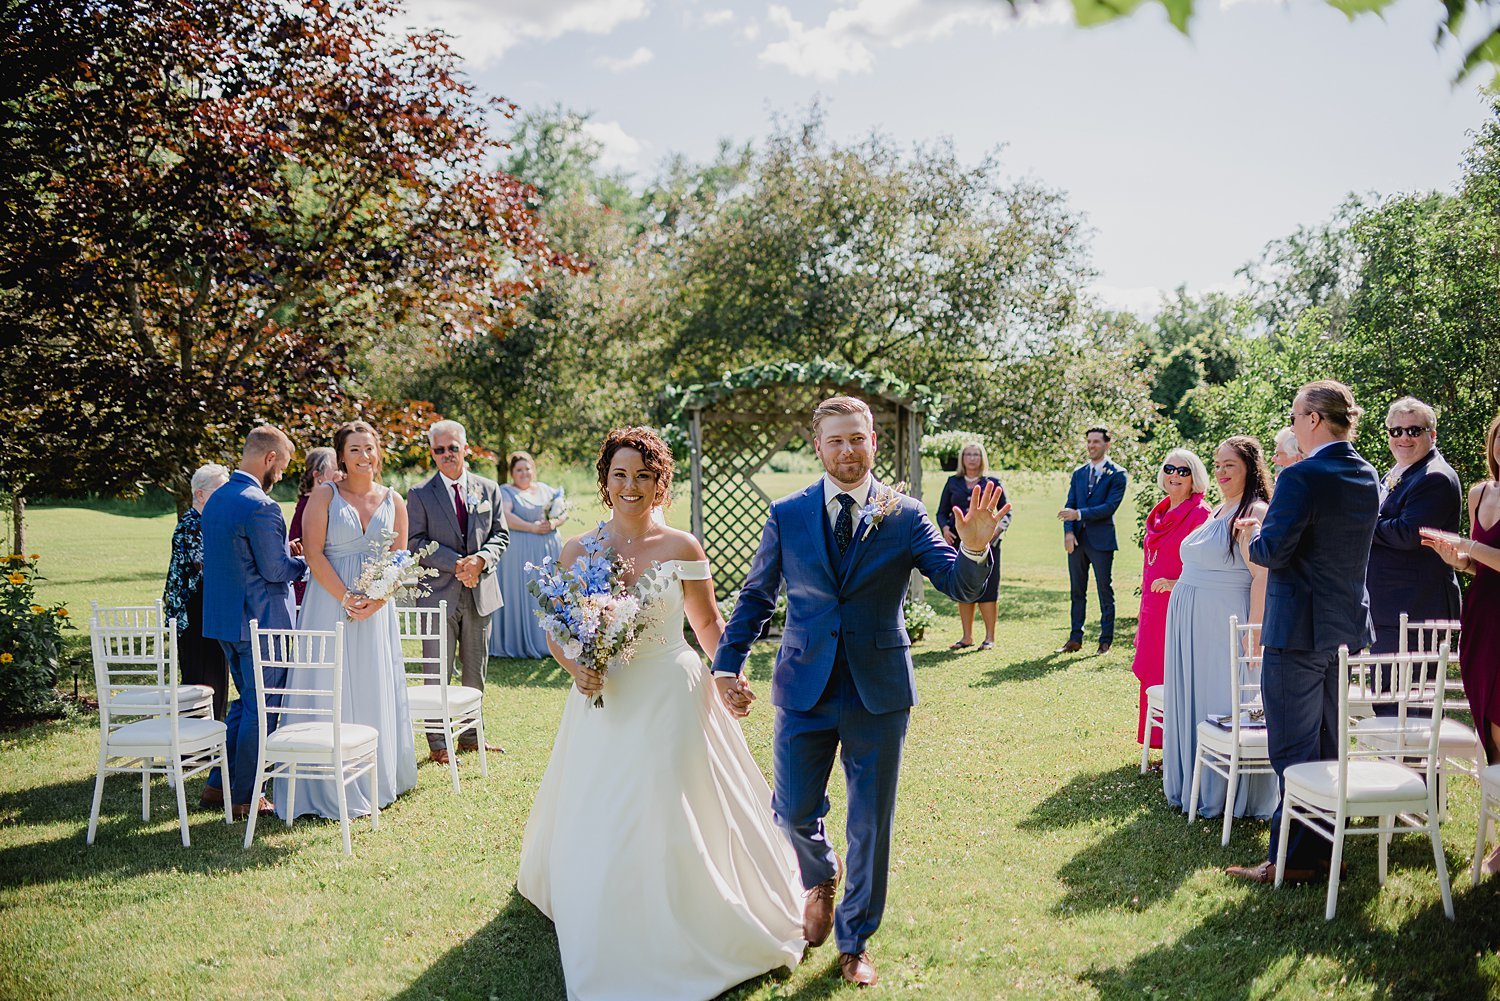 Elegant Summer Backyard Tented Wedding in Sydenham, Ontario | Prince Edward County Wedding Photographer | Holly McMurter Photographs_0052.jpg